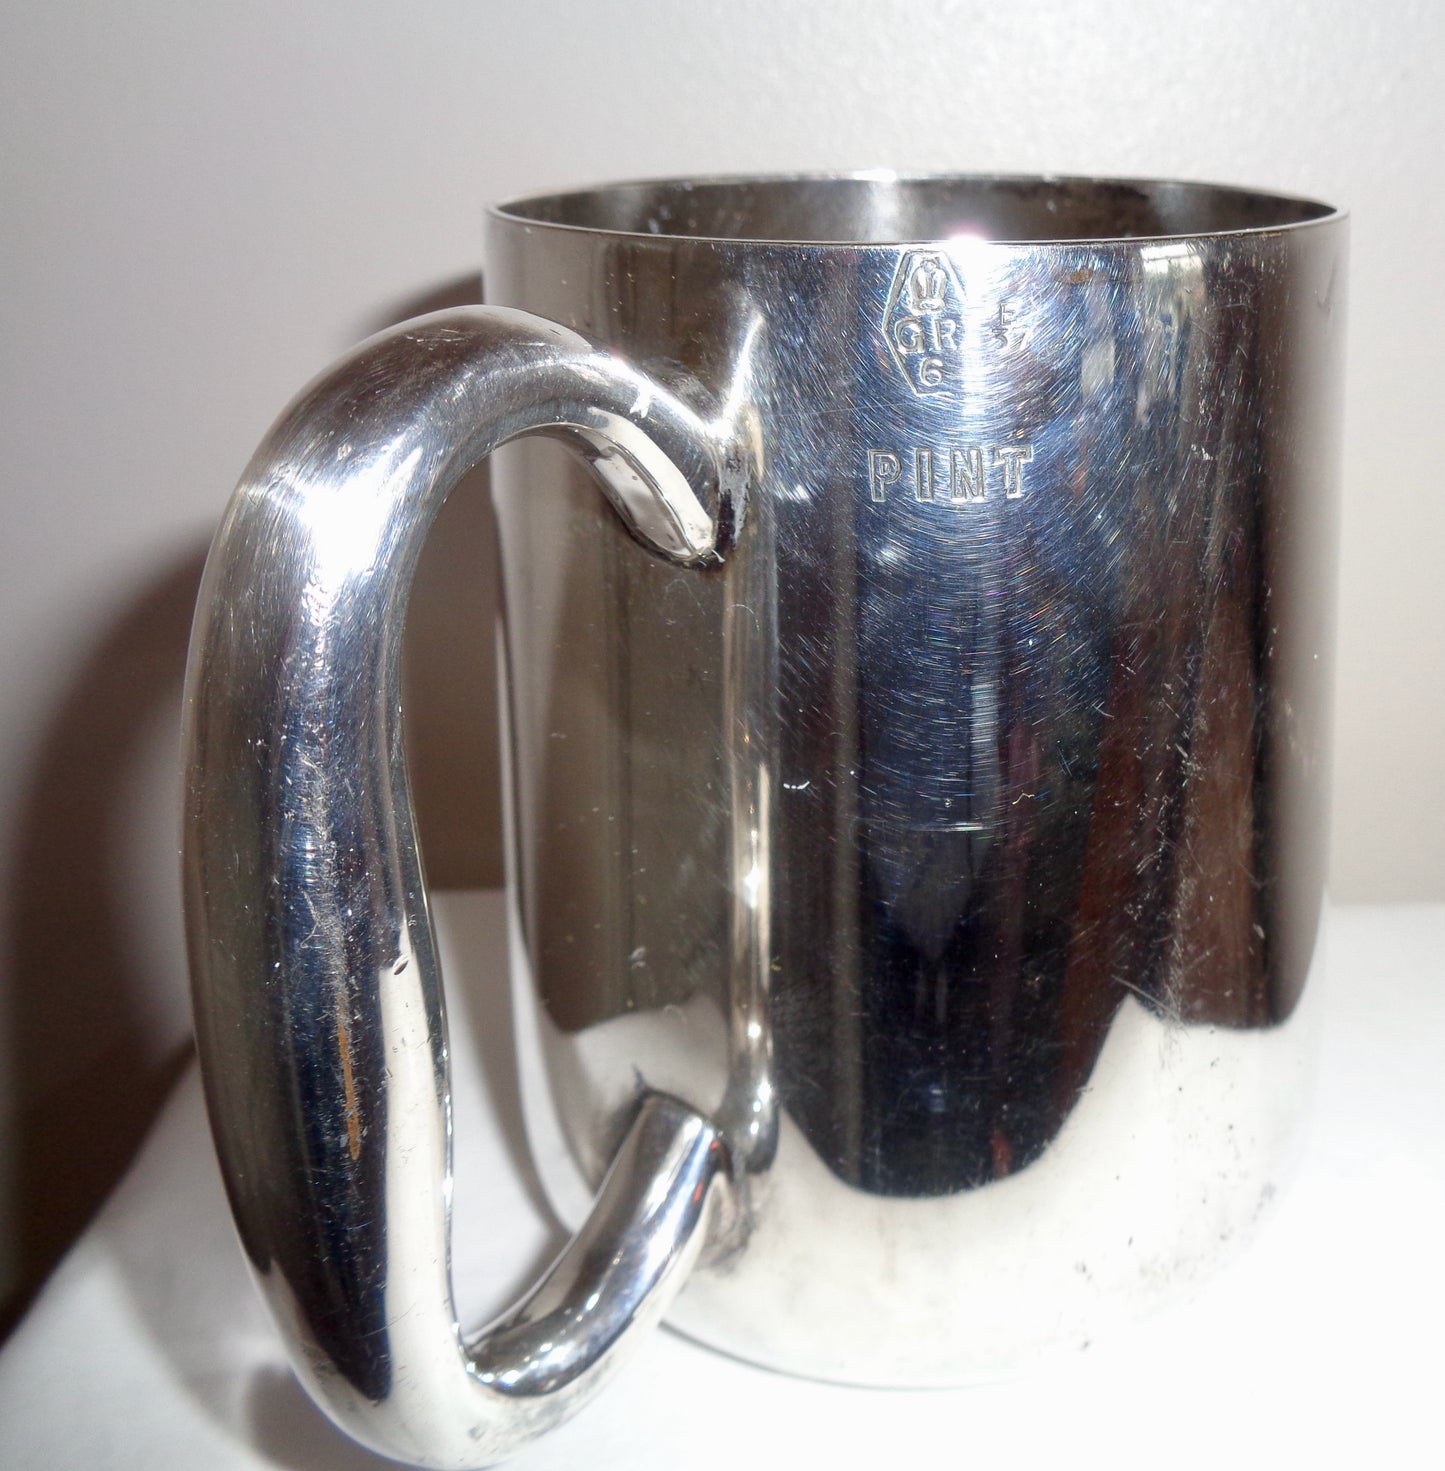 1937 1 Pint Cardinal Plate Silver Tankard Drinks Measure By Goldsmiths